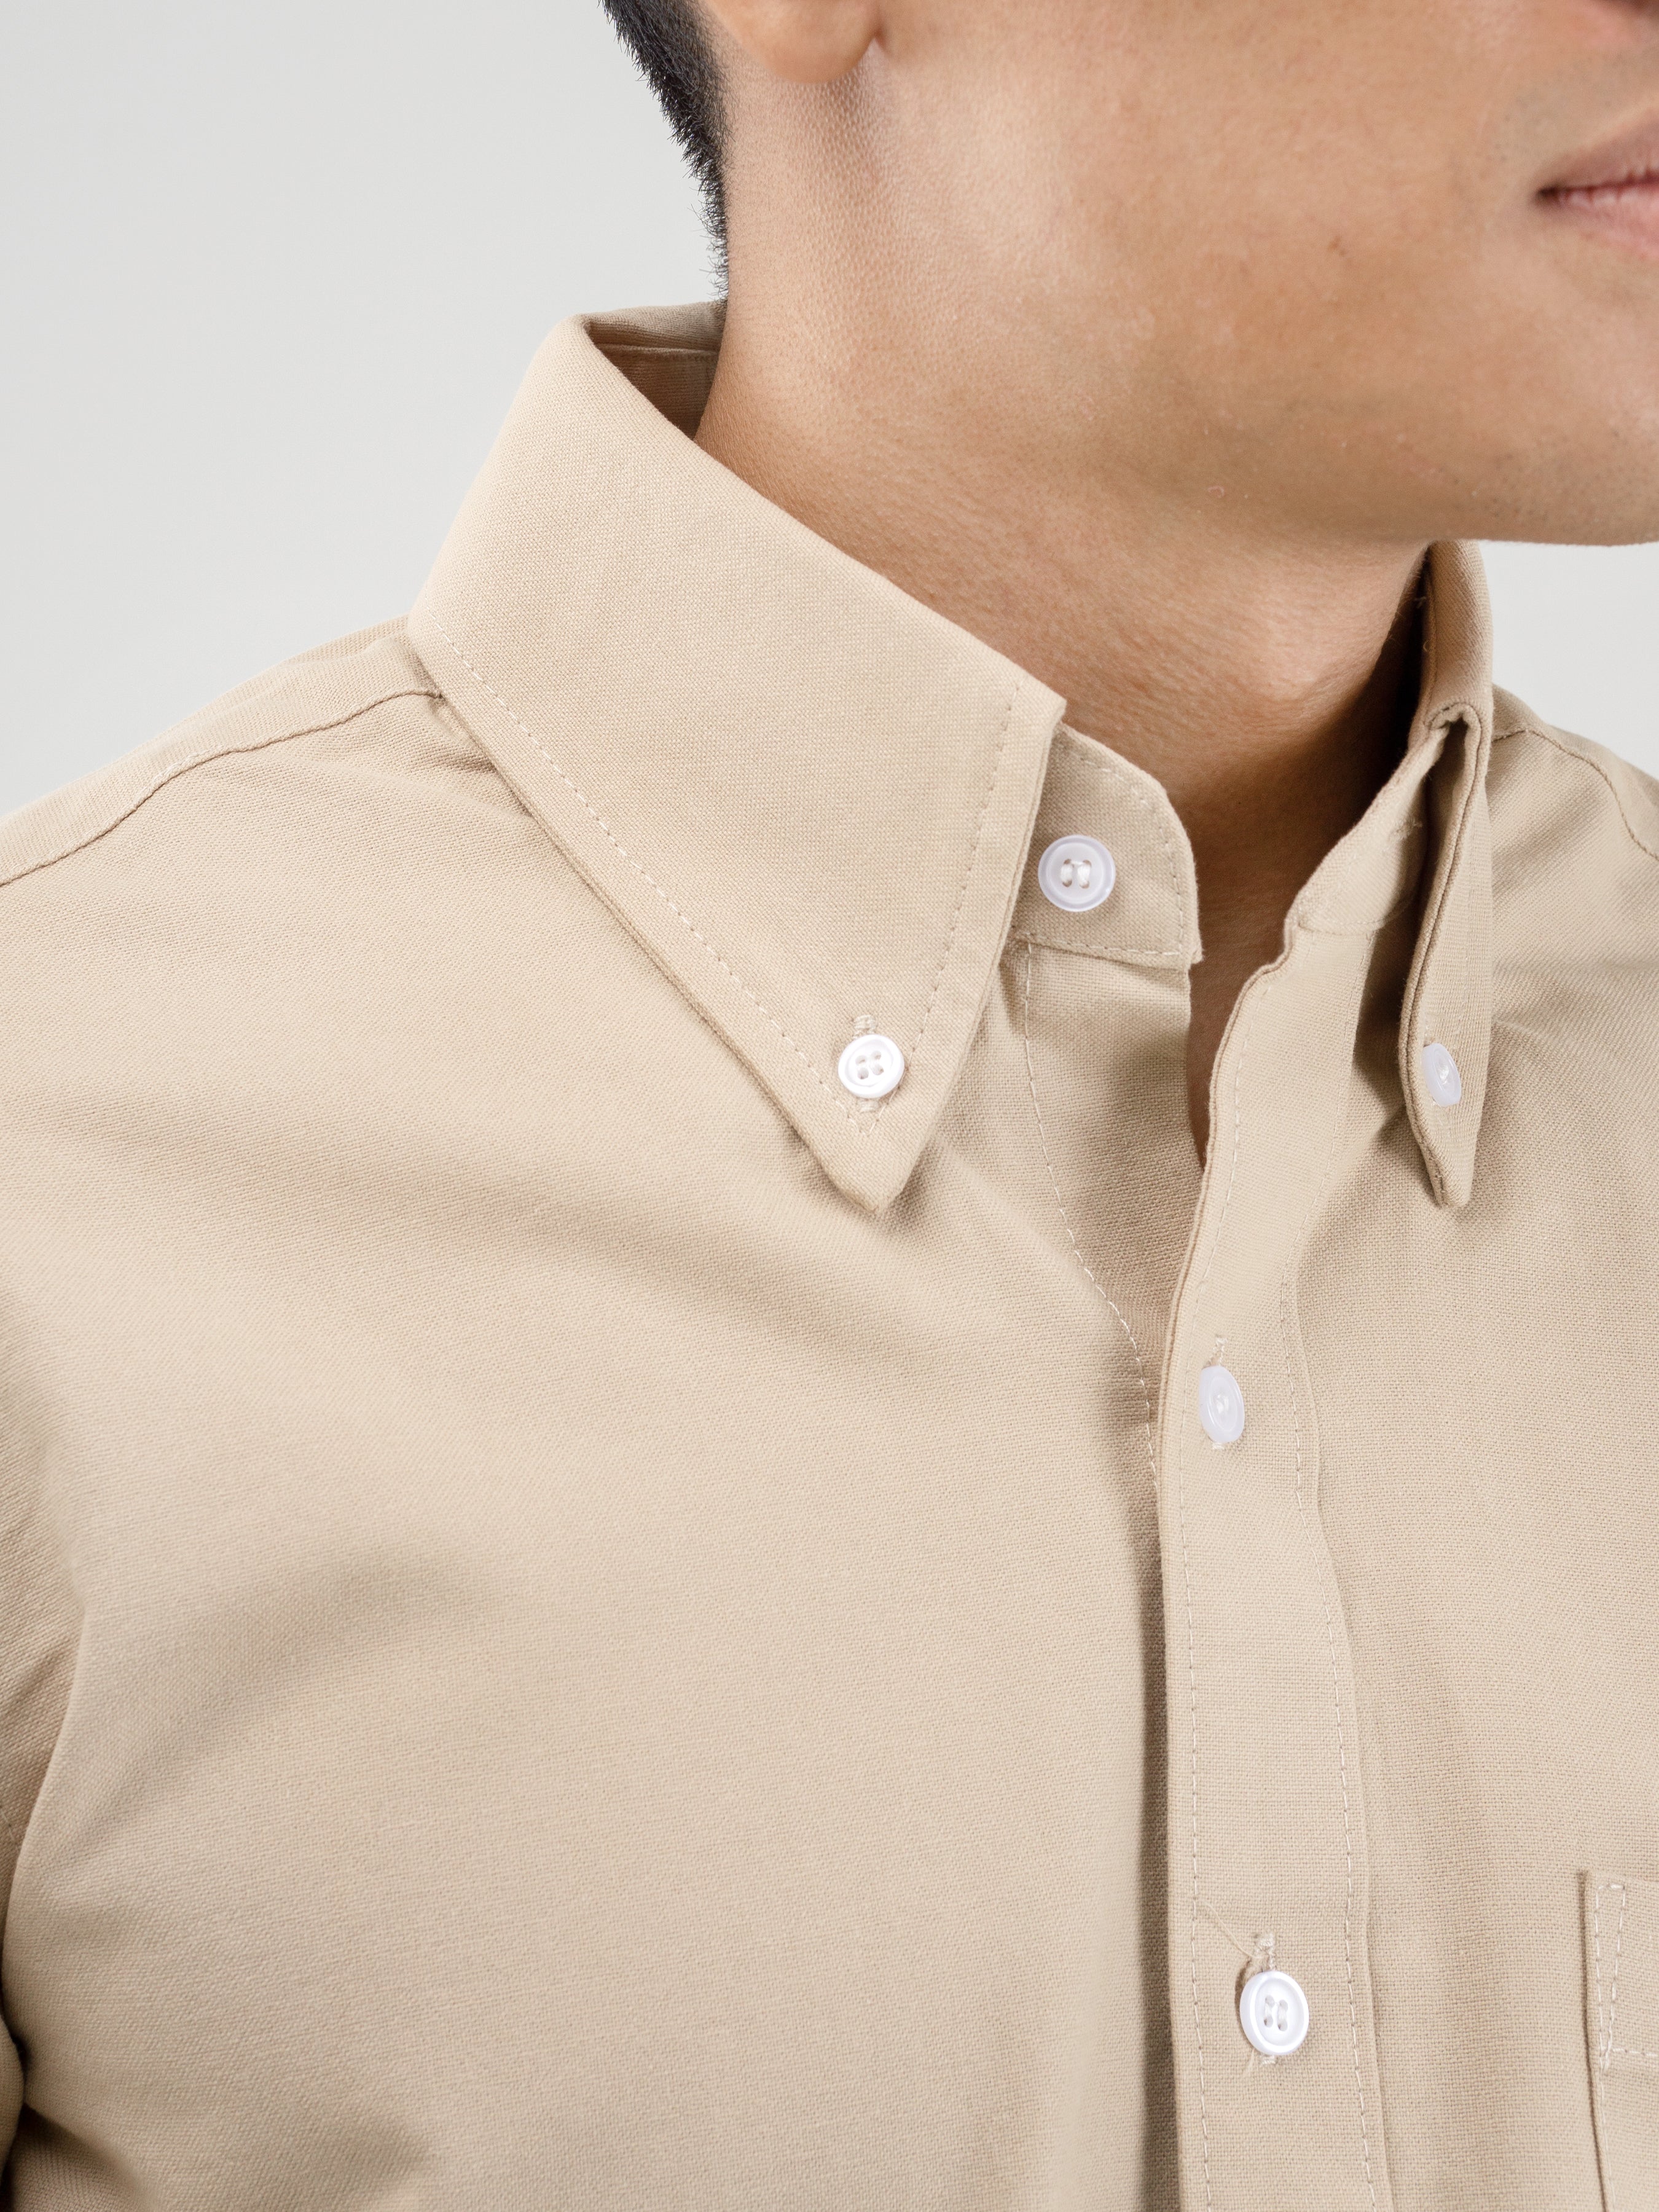 Formal Shirt - Beige Oxford Button-Down Collar